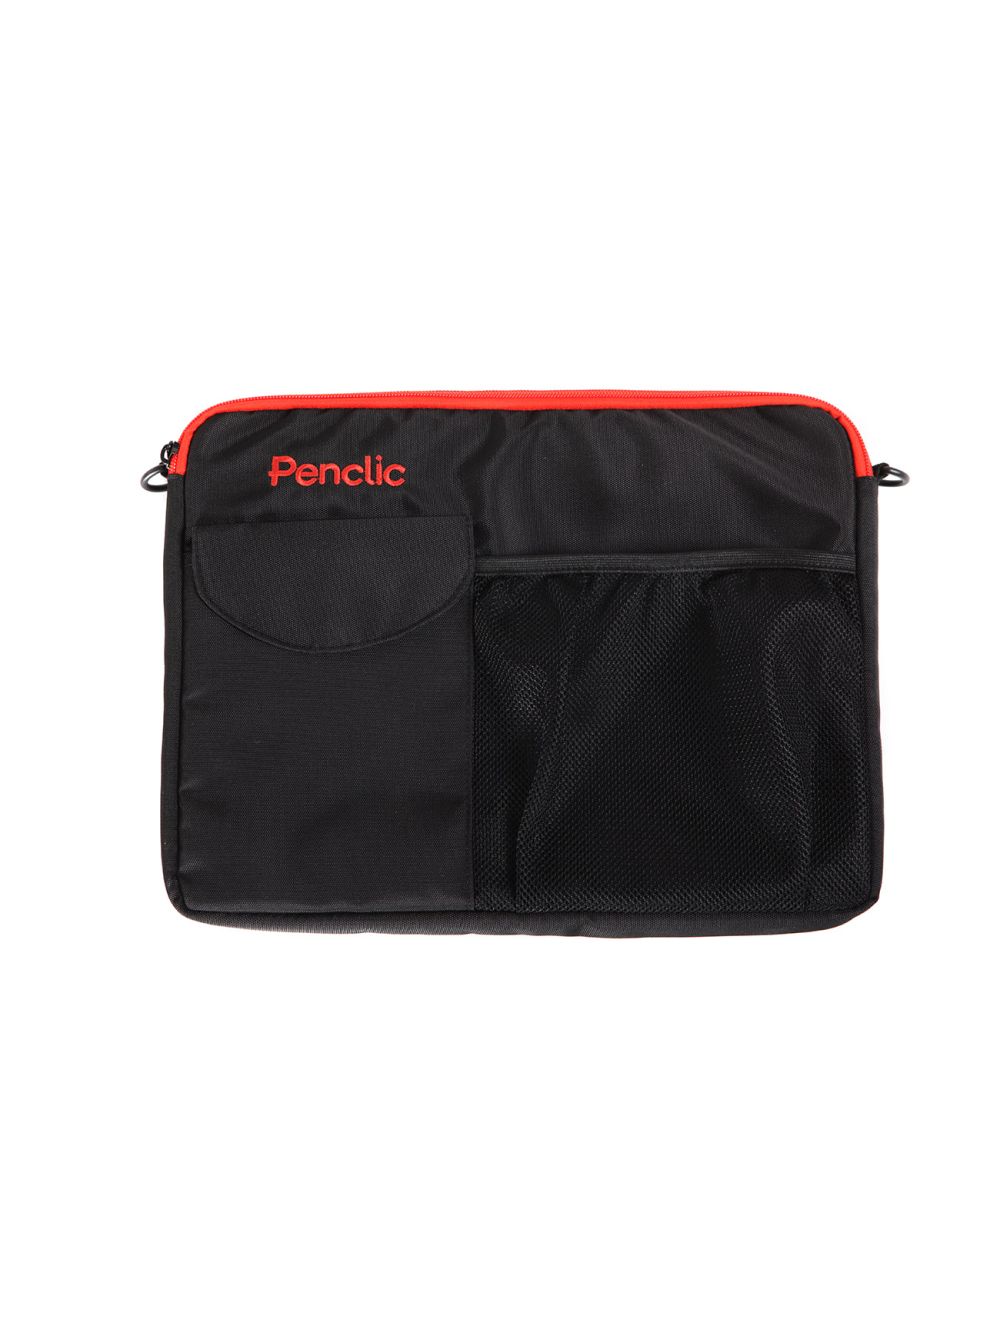 Penclic Travelkit Bag